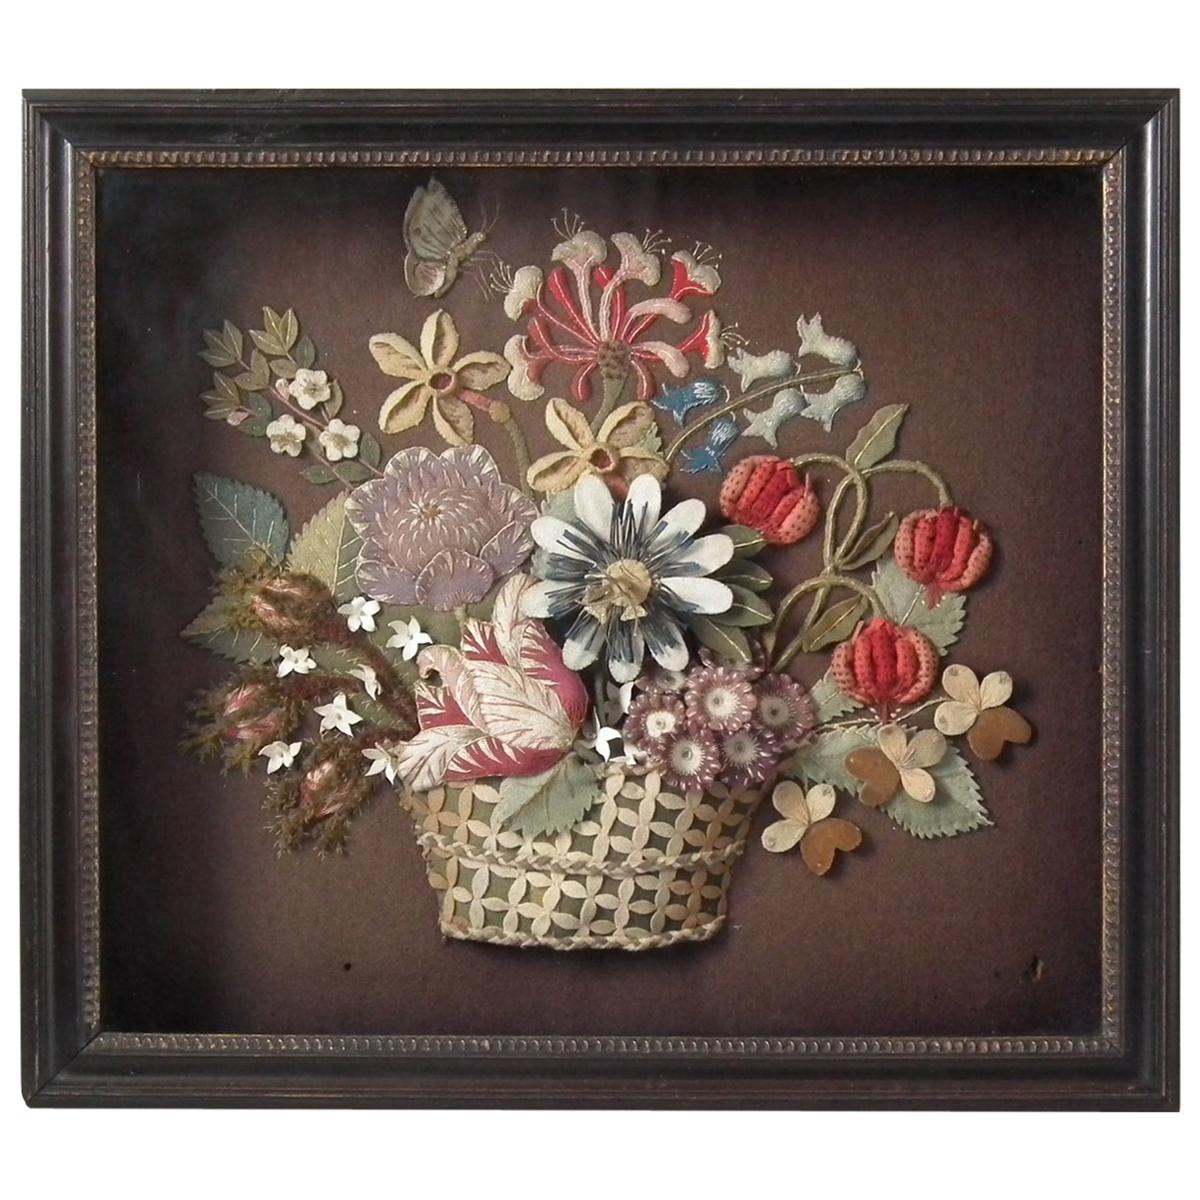 Flowerbasket Raisedwork Embroidery in Shadow Box Frame